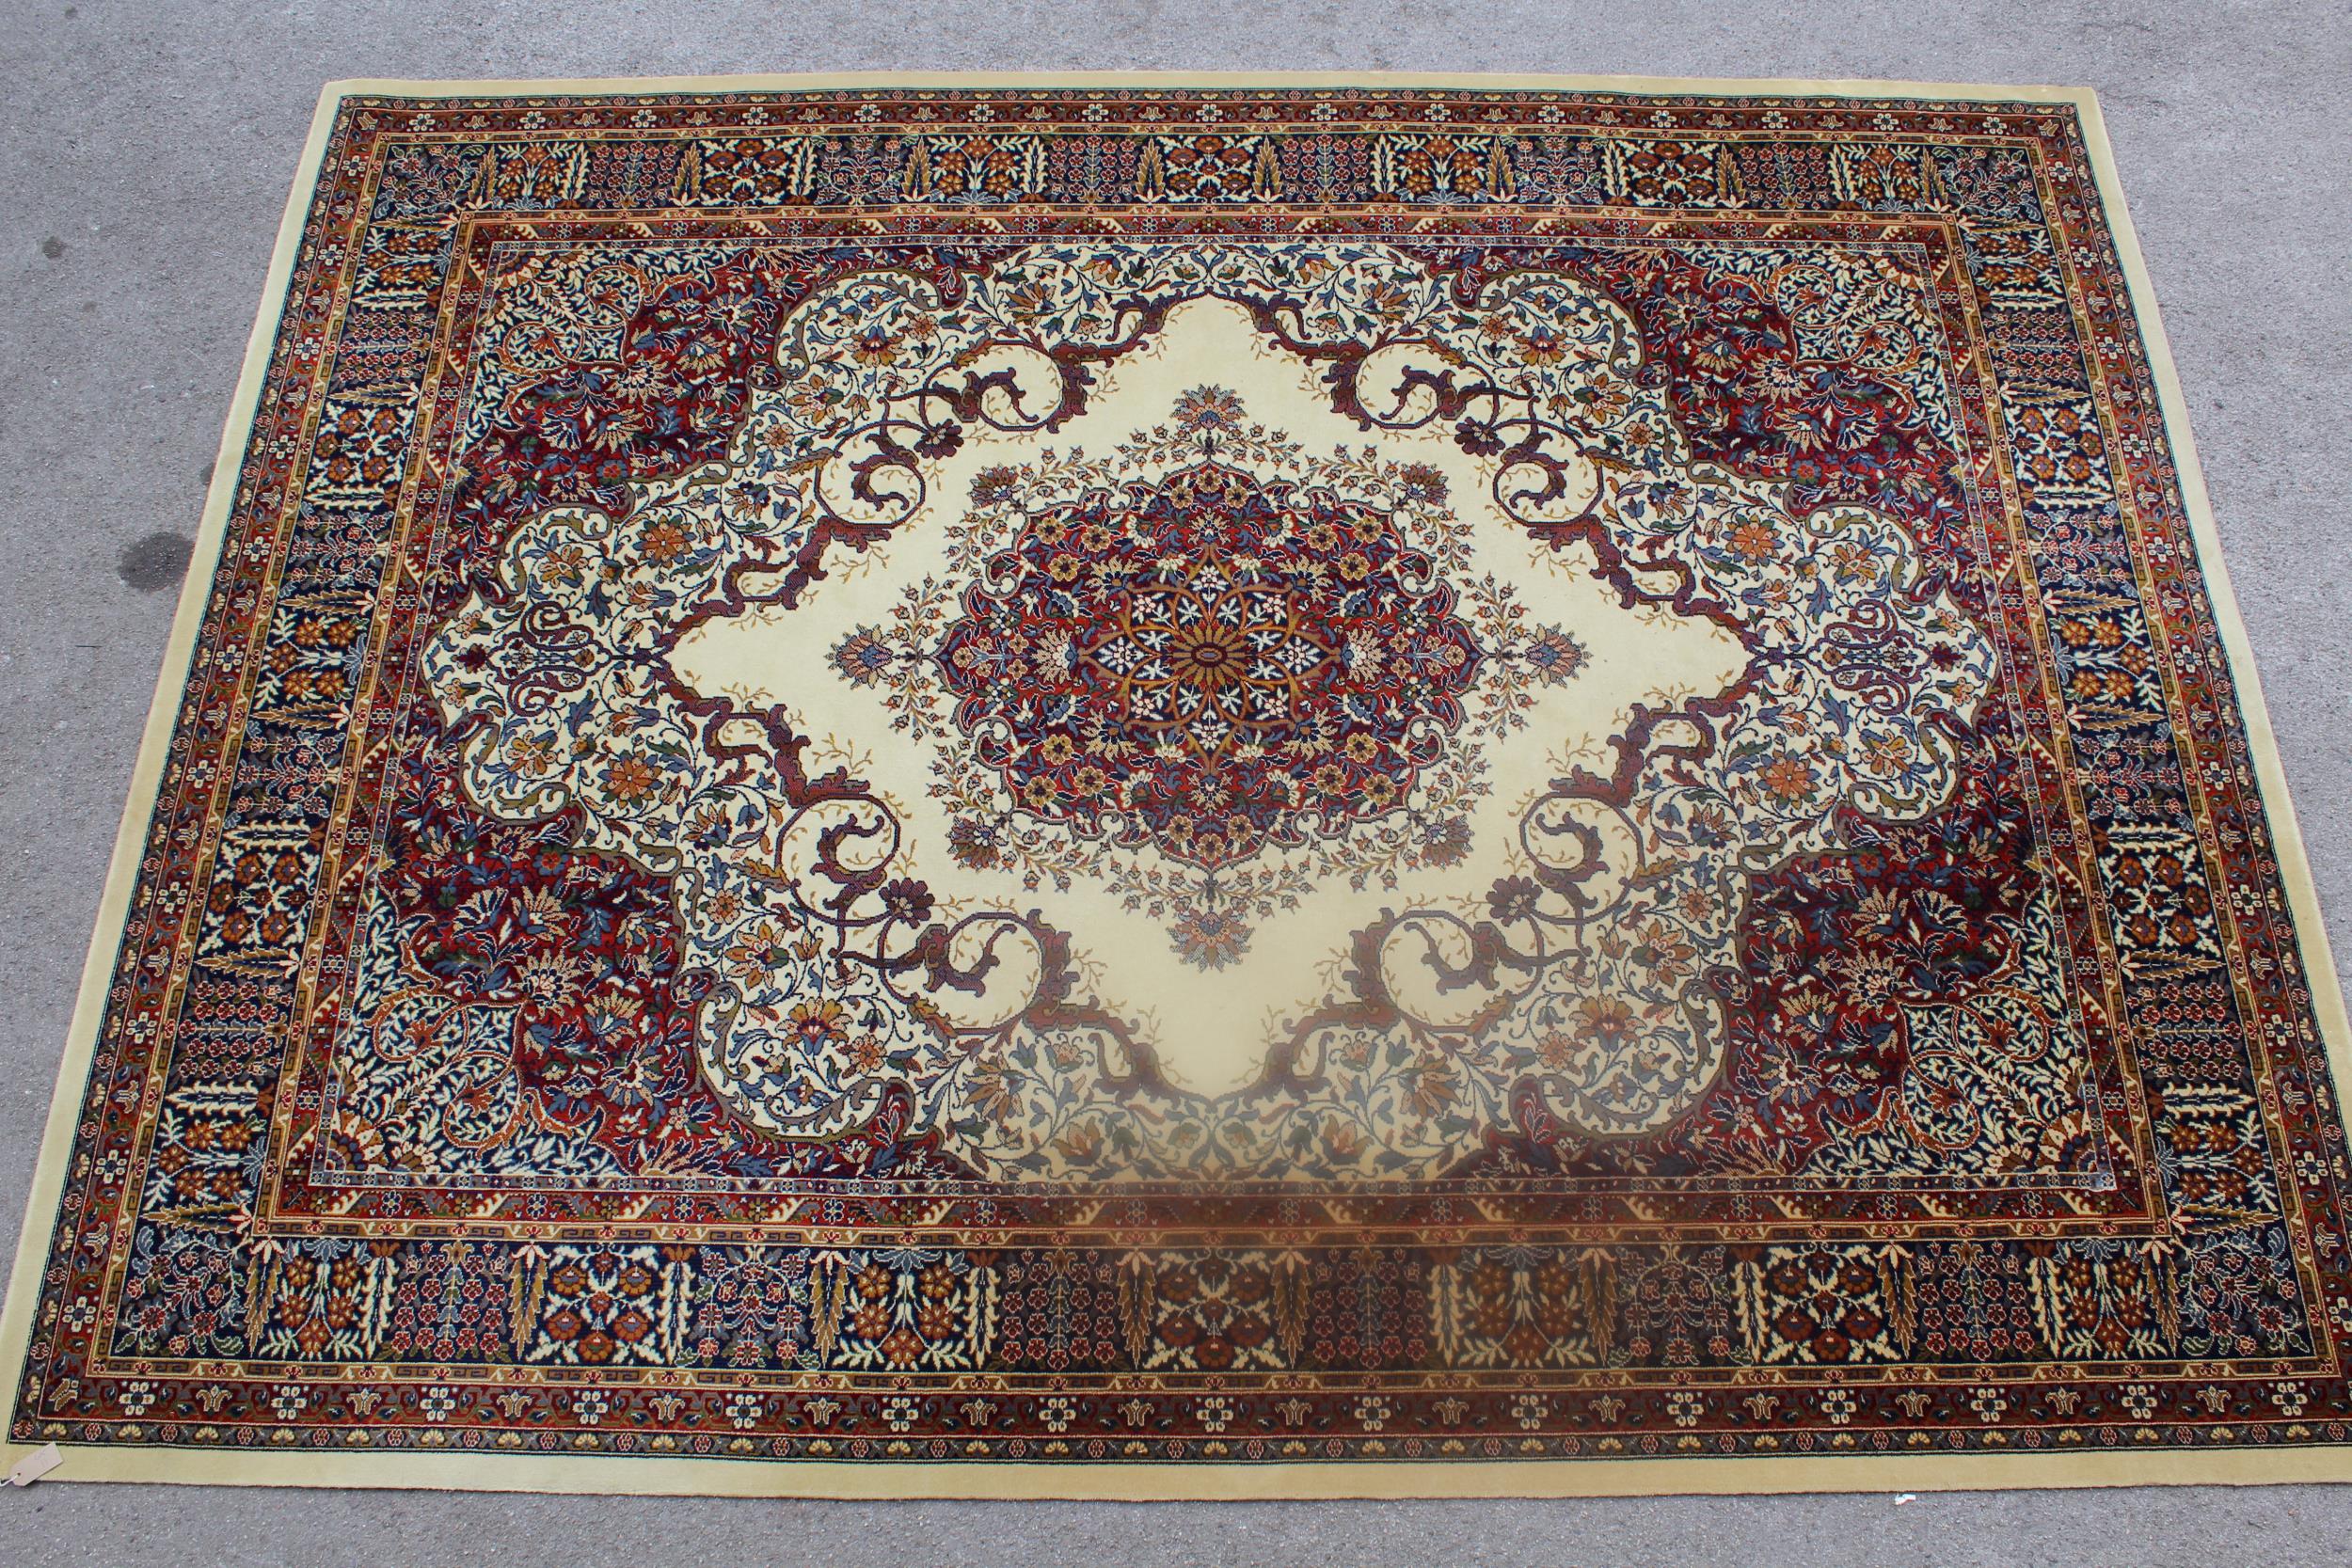 Machine woven Persian design carpet on beige ground, 144ins x 108ins